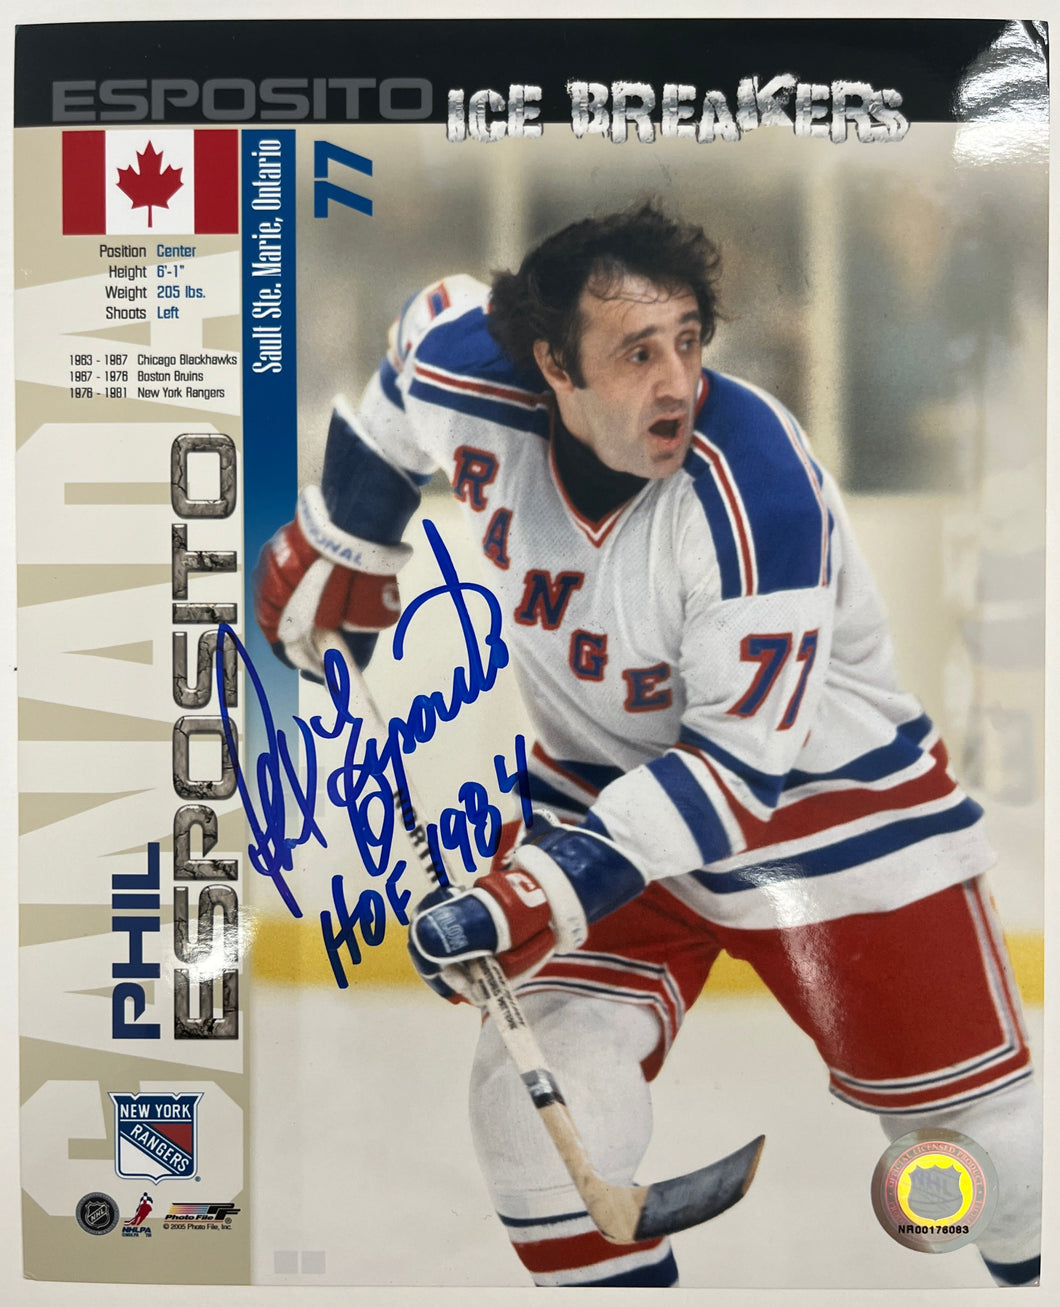 Phil Esposito - New York Rangers 8x10 Autographed Photo